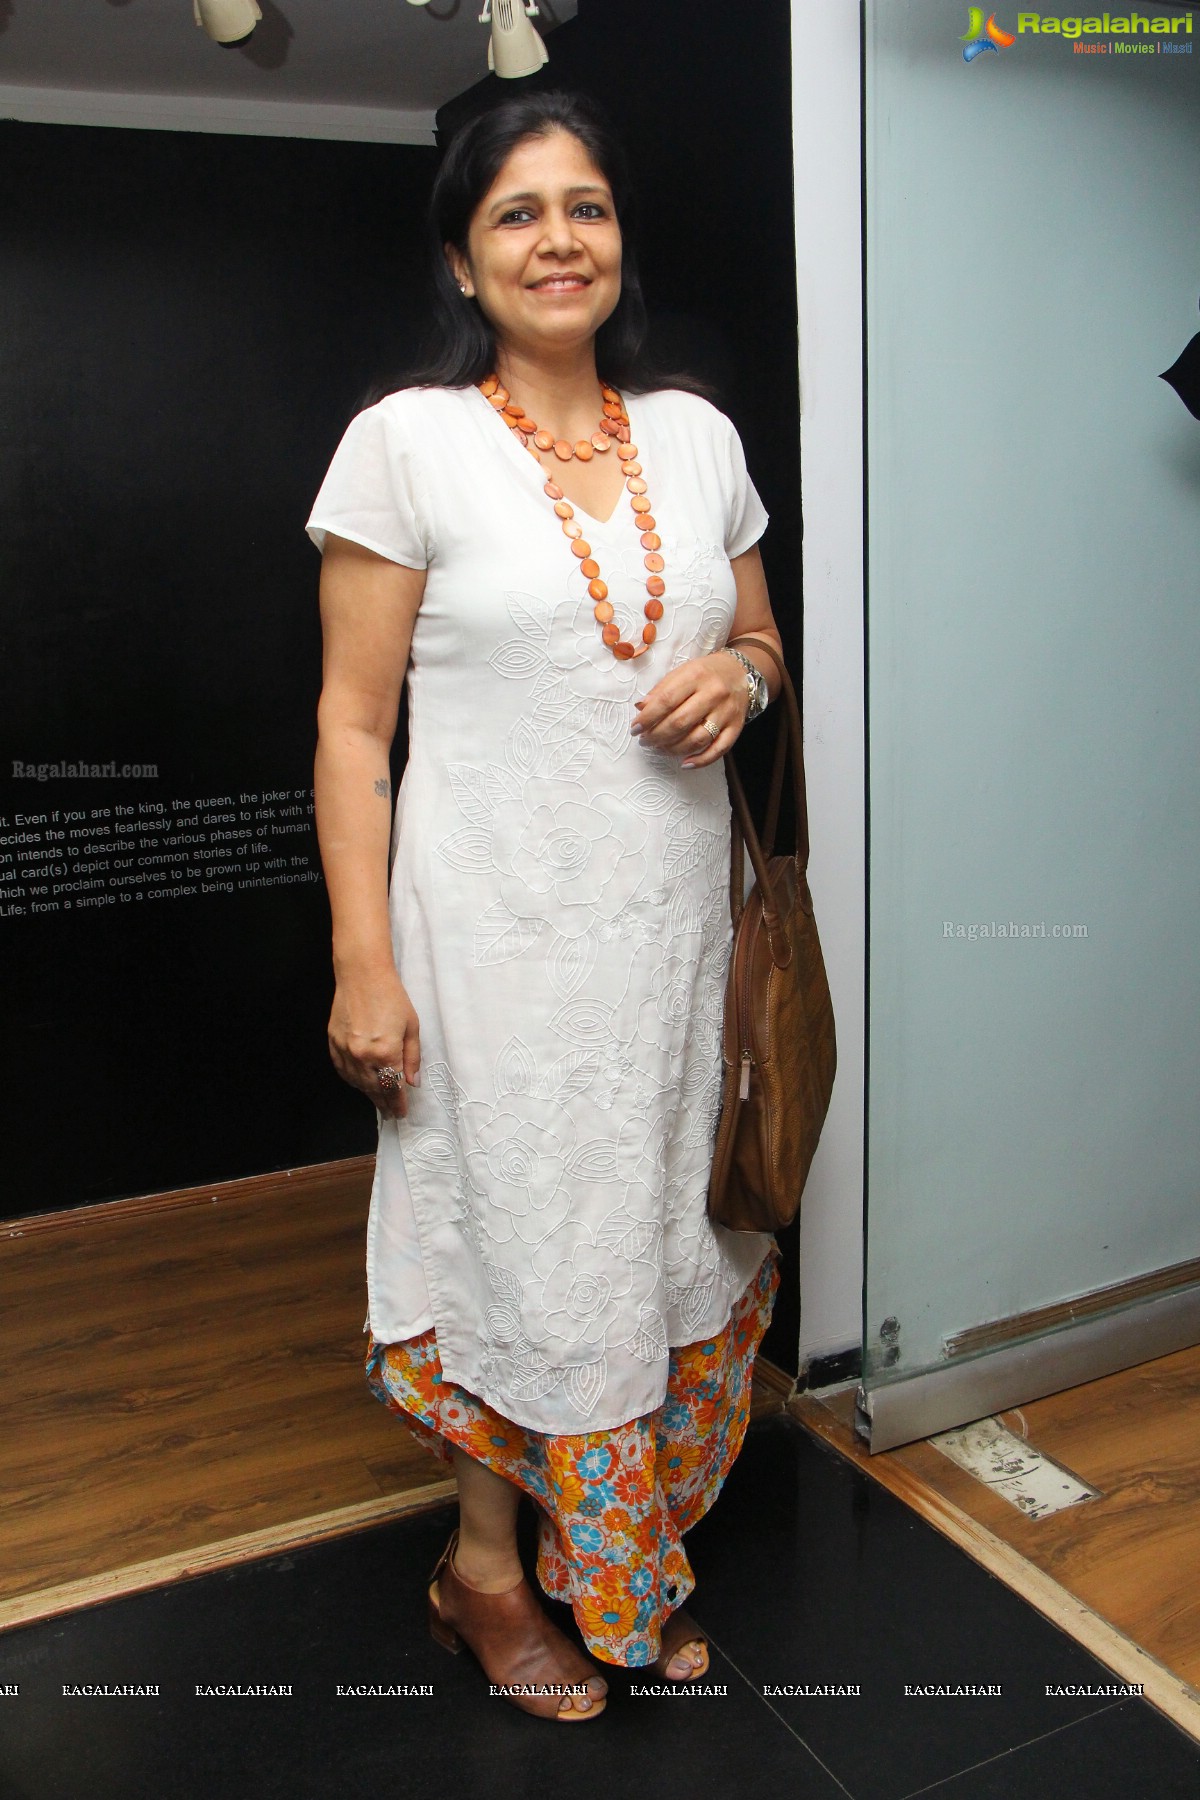 Solo Exhibition by Avijit Dutta at Kalakriti Art Gallery